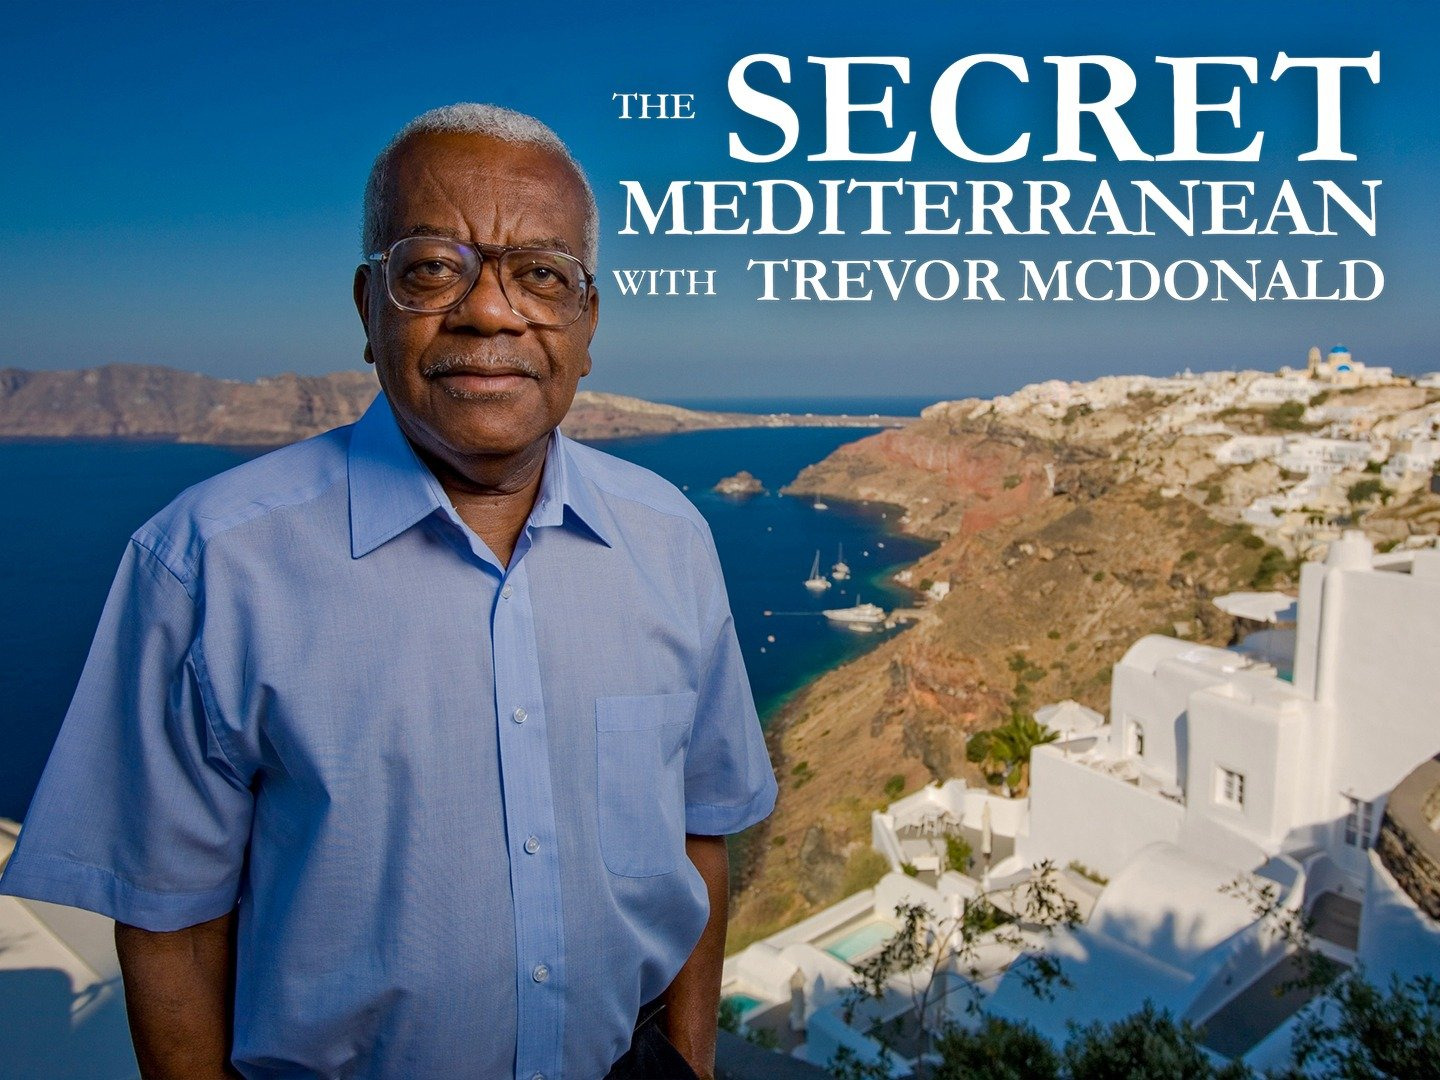 Show The Secret Mediterranean with Trevor McDonald